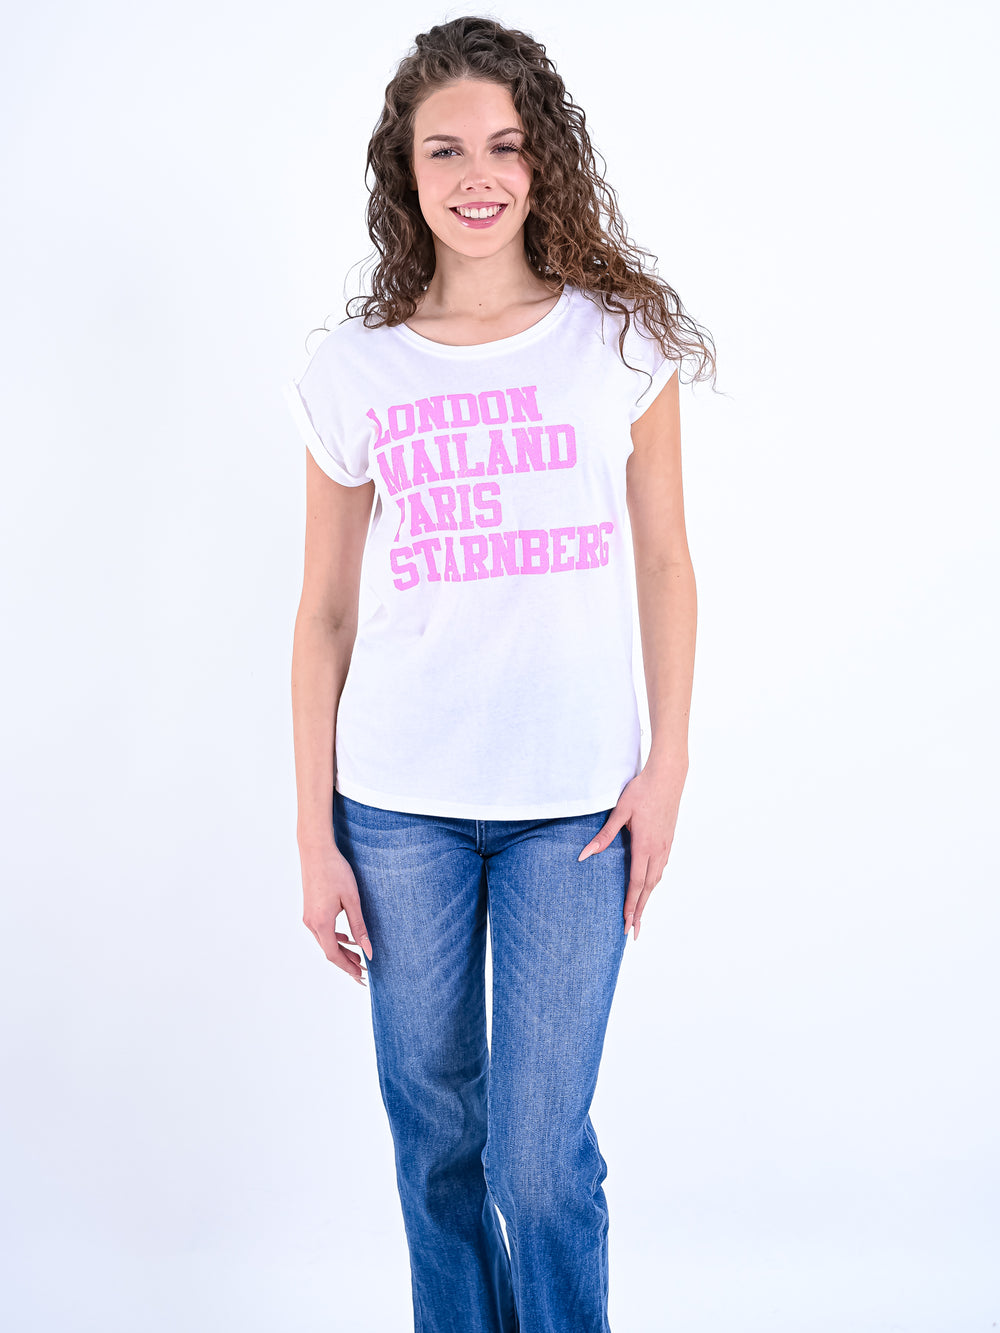 T-Shirt Studs "London Mailand Paris Starnberg" Pink